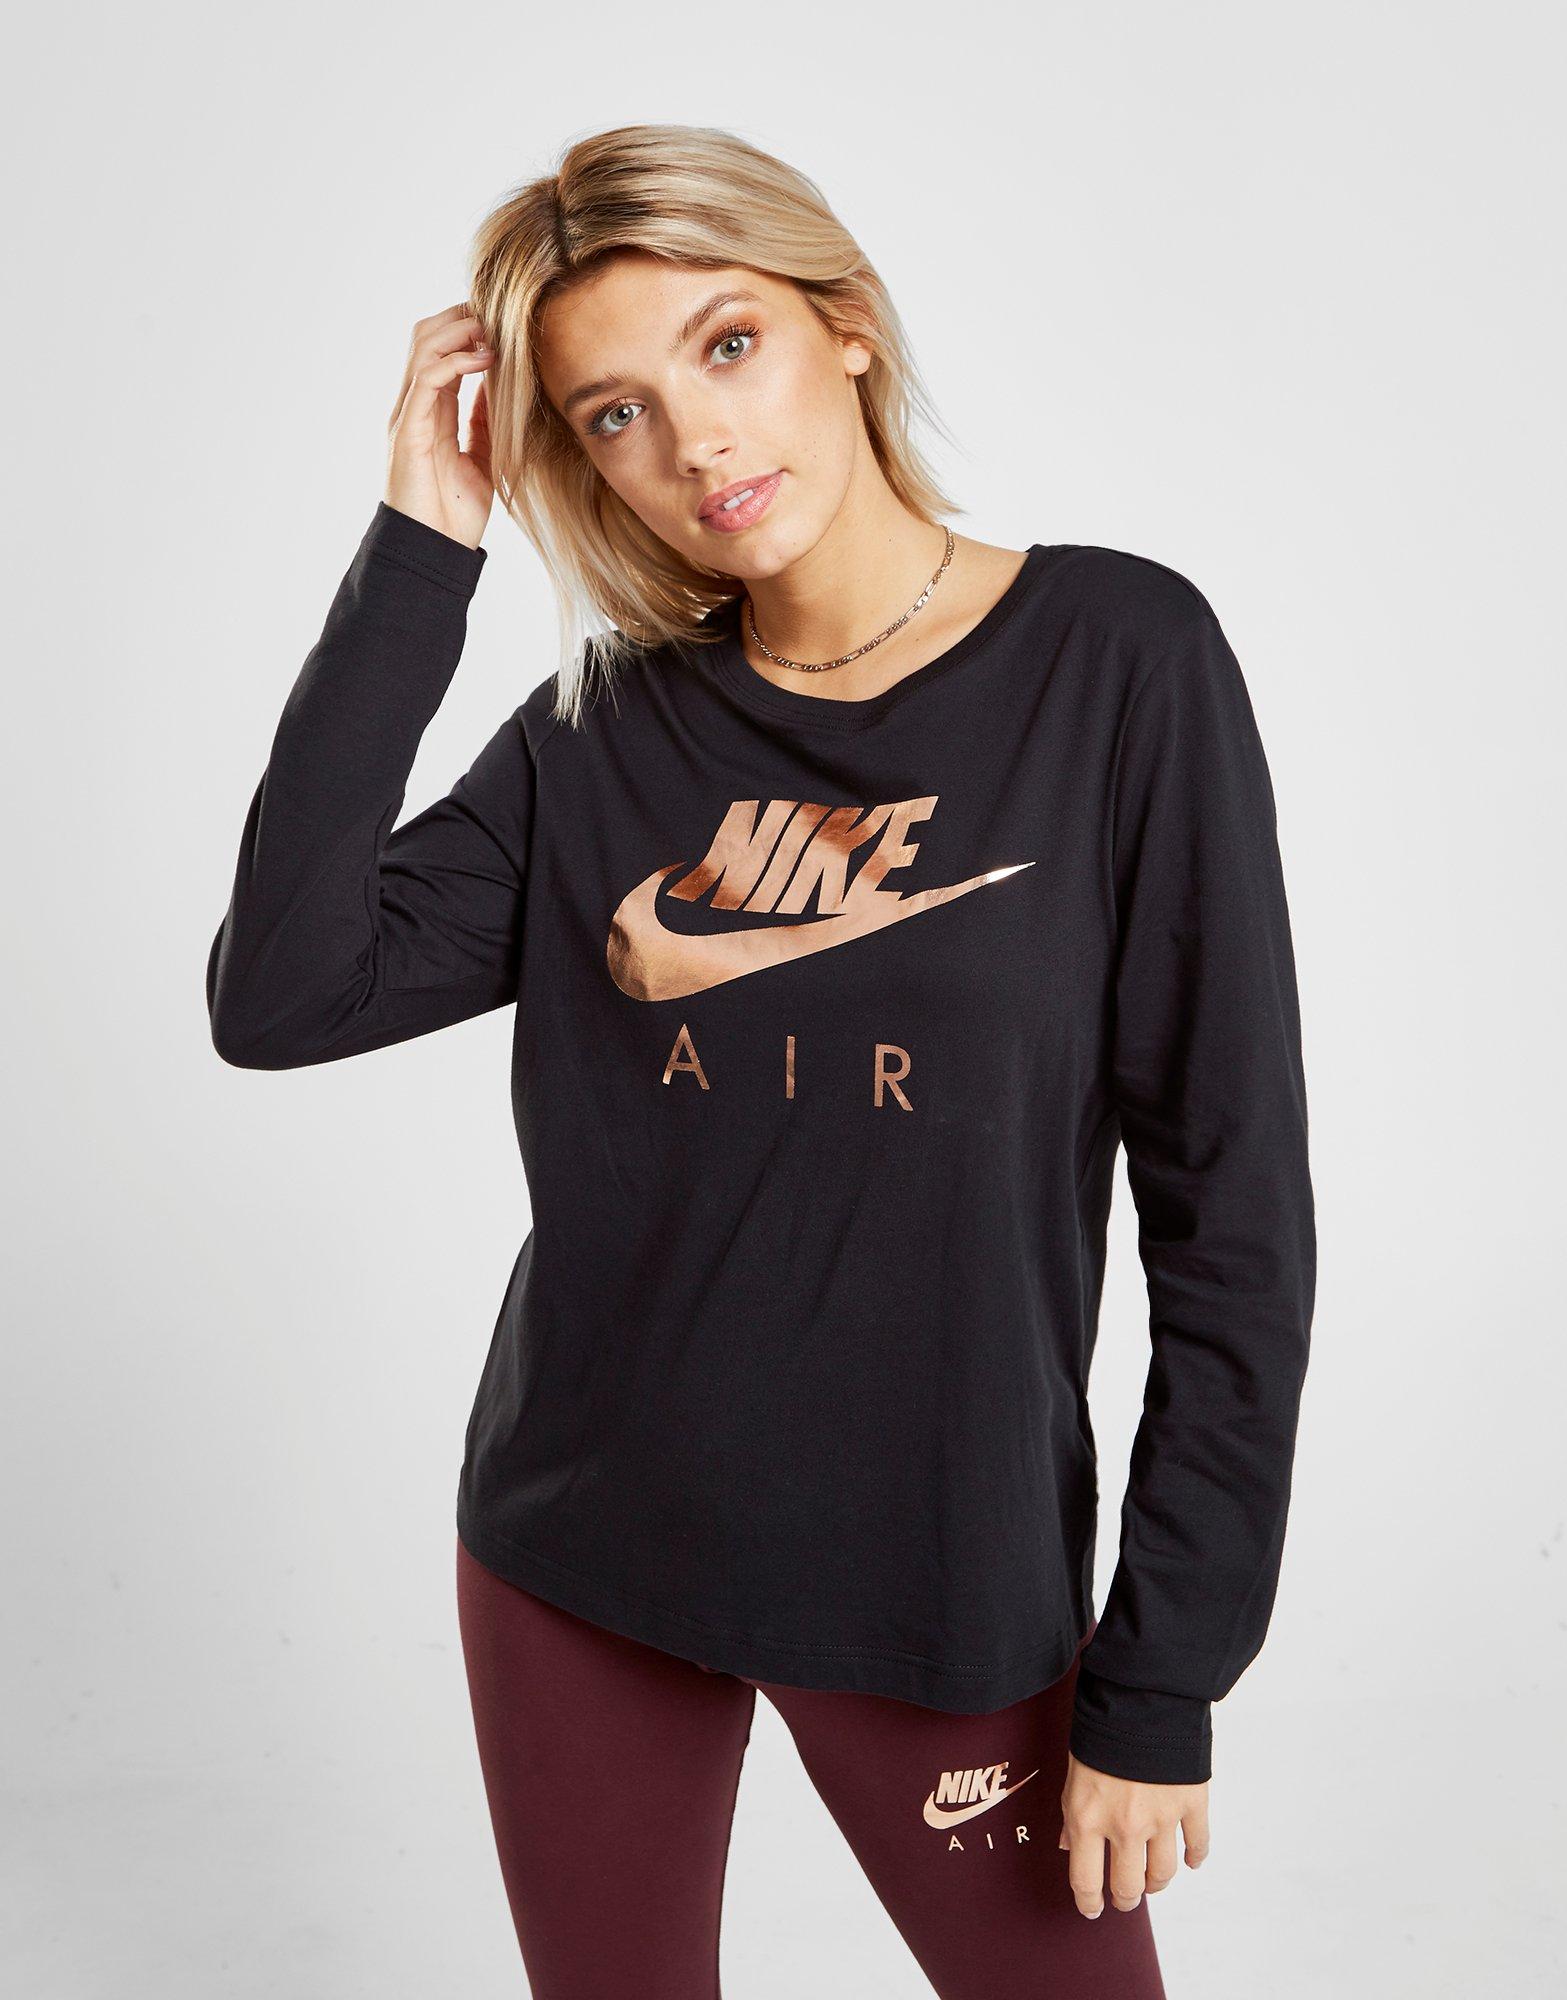 Nike T-shirt Manches Longues Femme | JD Sports